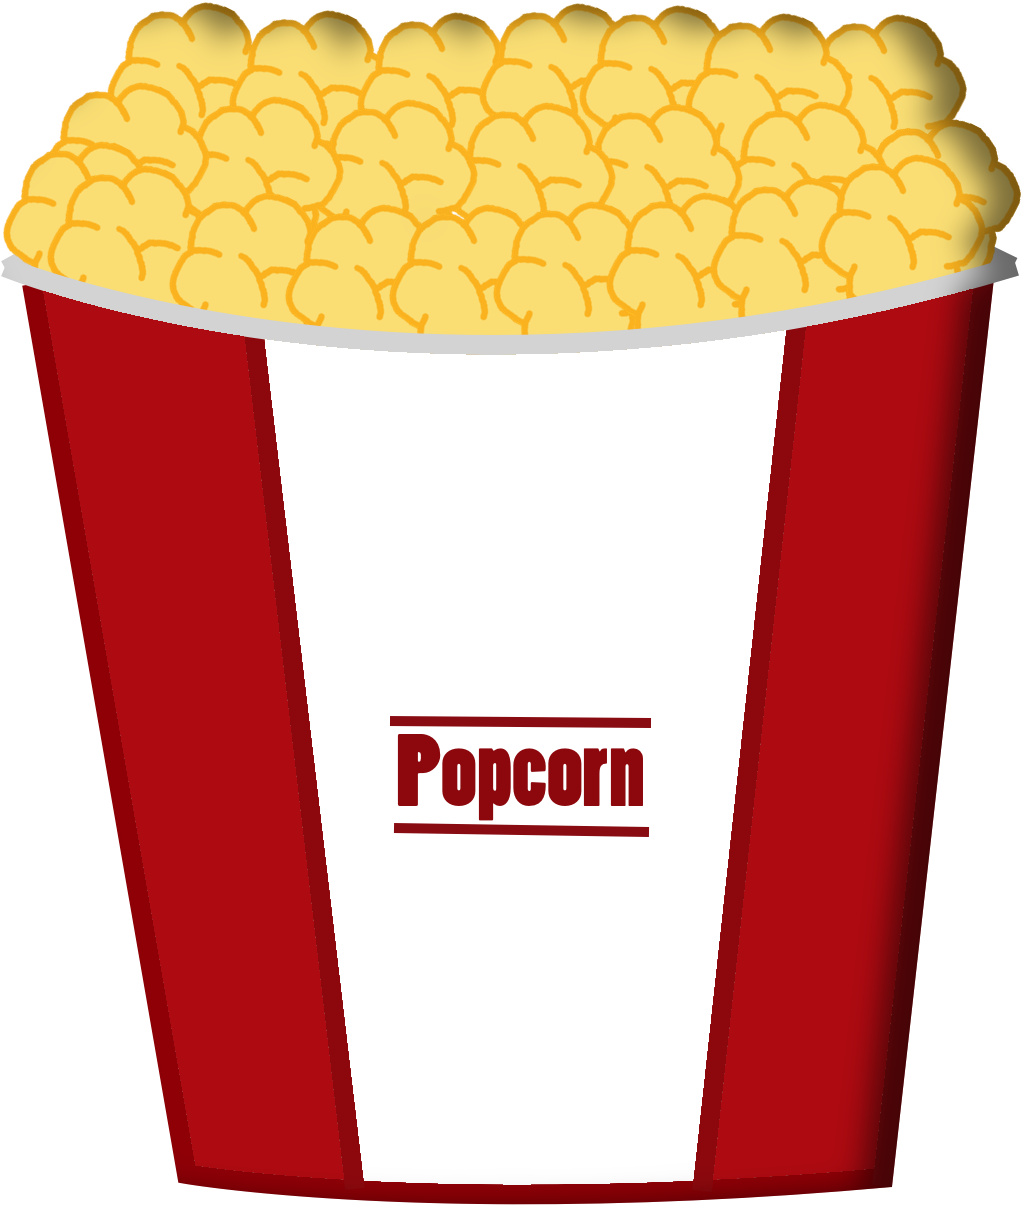 Bowl Of Popcorn Png